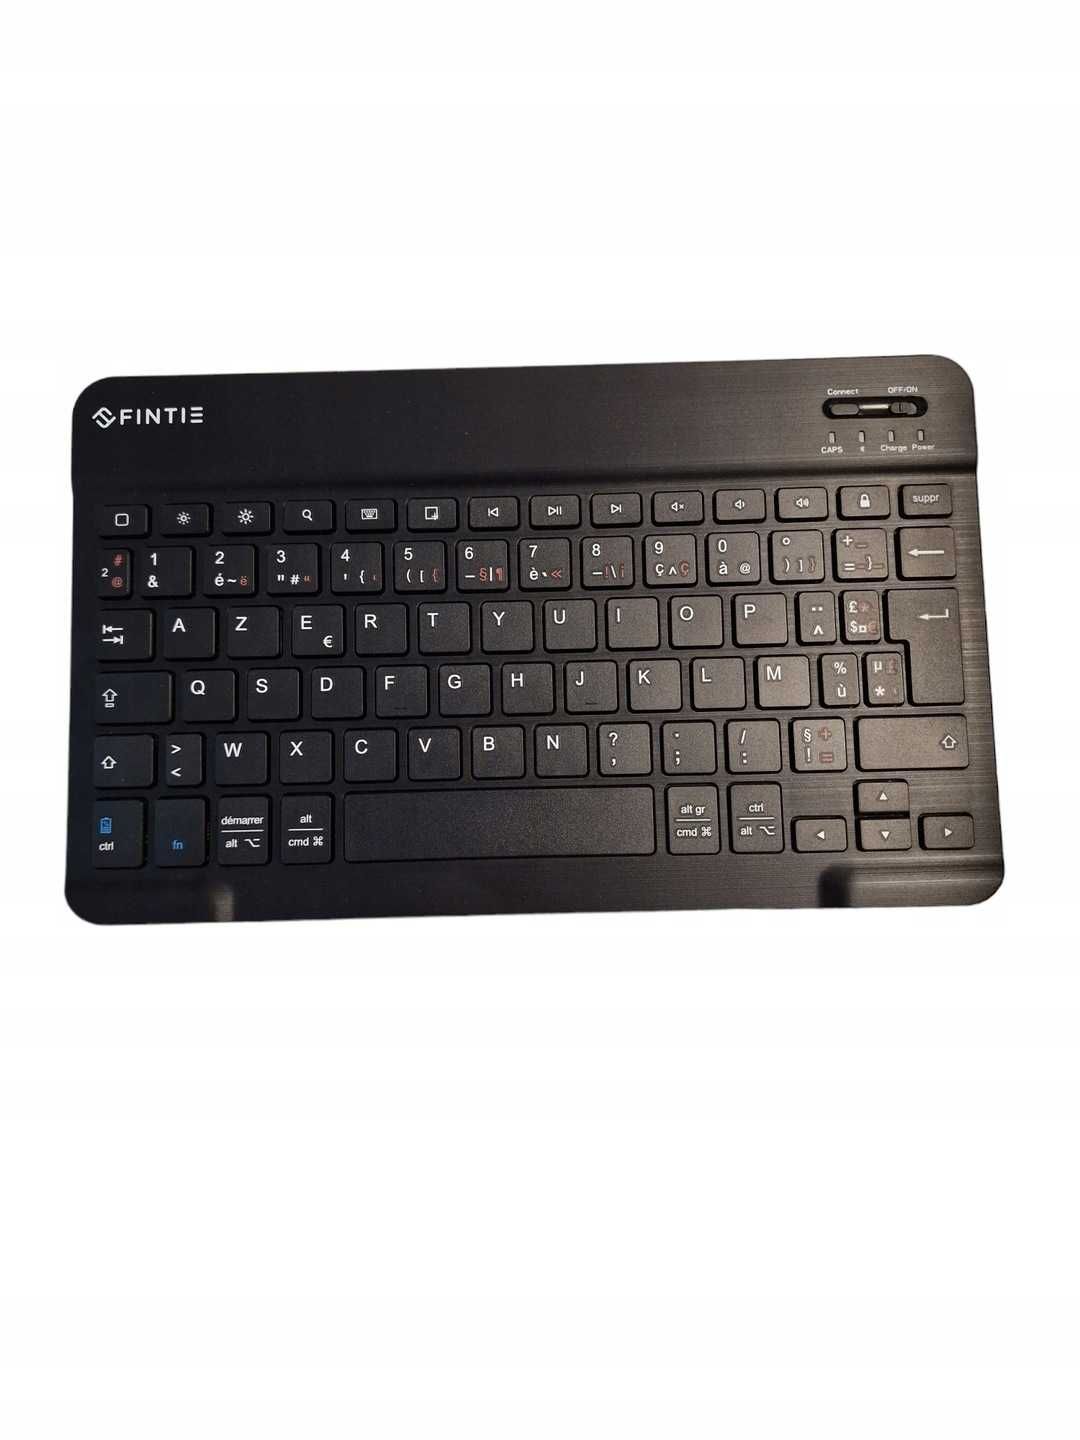 Блютуз клавиатура с подсветкой Arteck HB030B